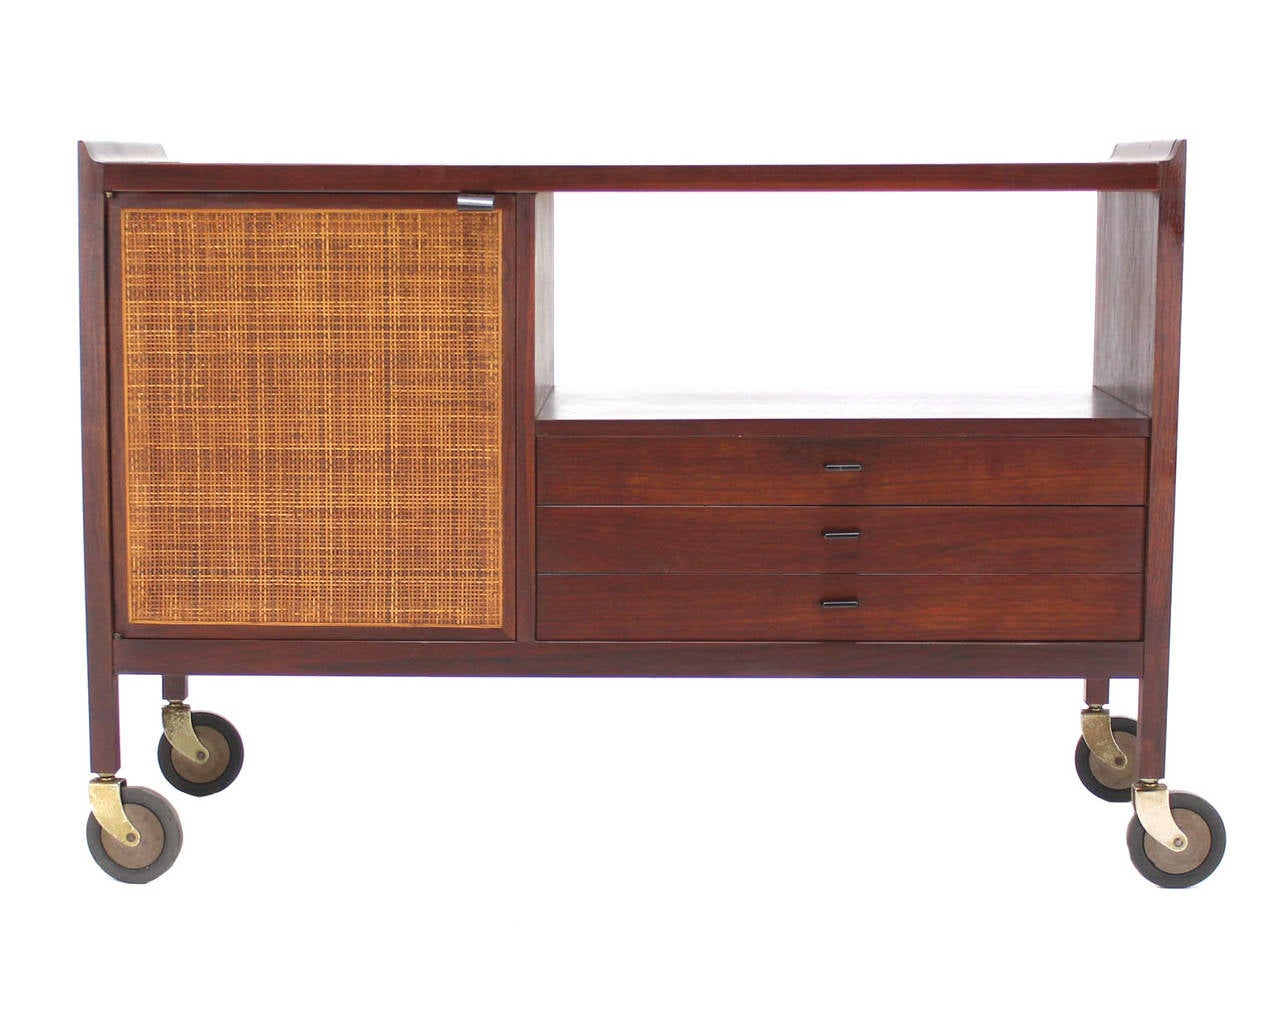 Very nice mid-century modern bar cart cabinet on wheels.